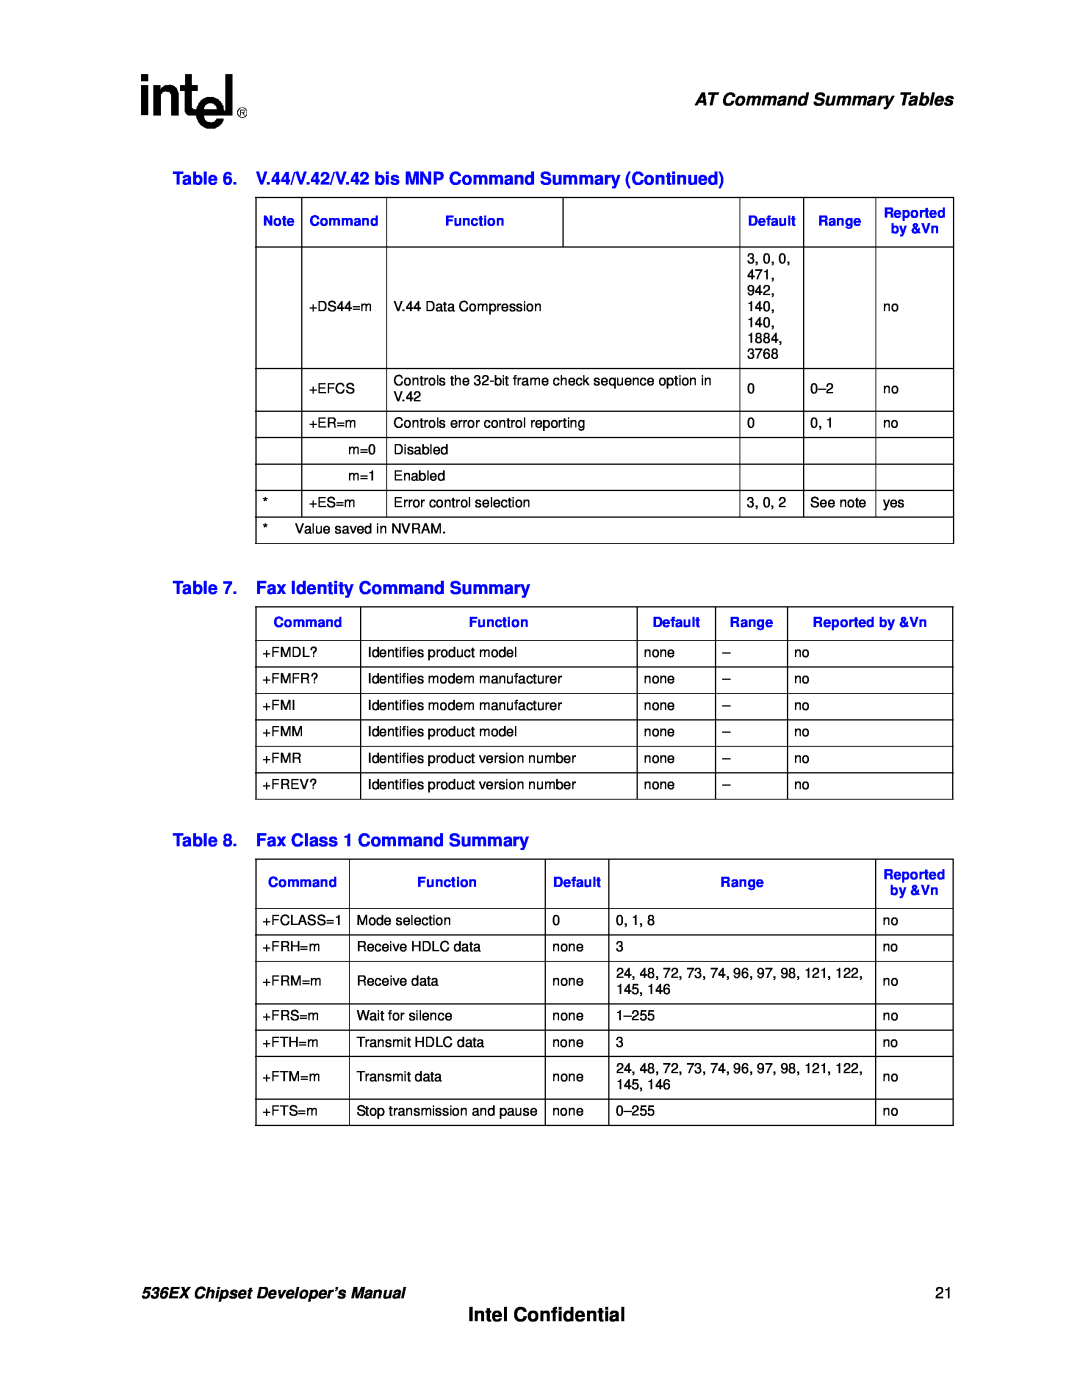 Intel 536EX manual Intel Confidential, AT Command Summary Tables, Fax Identity Command Summary, Fax Class 1 Command Summary 